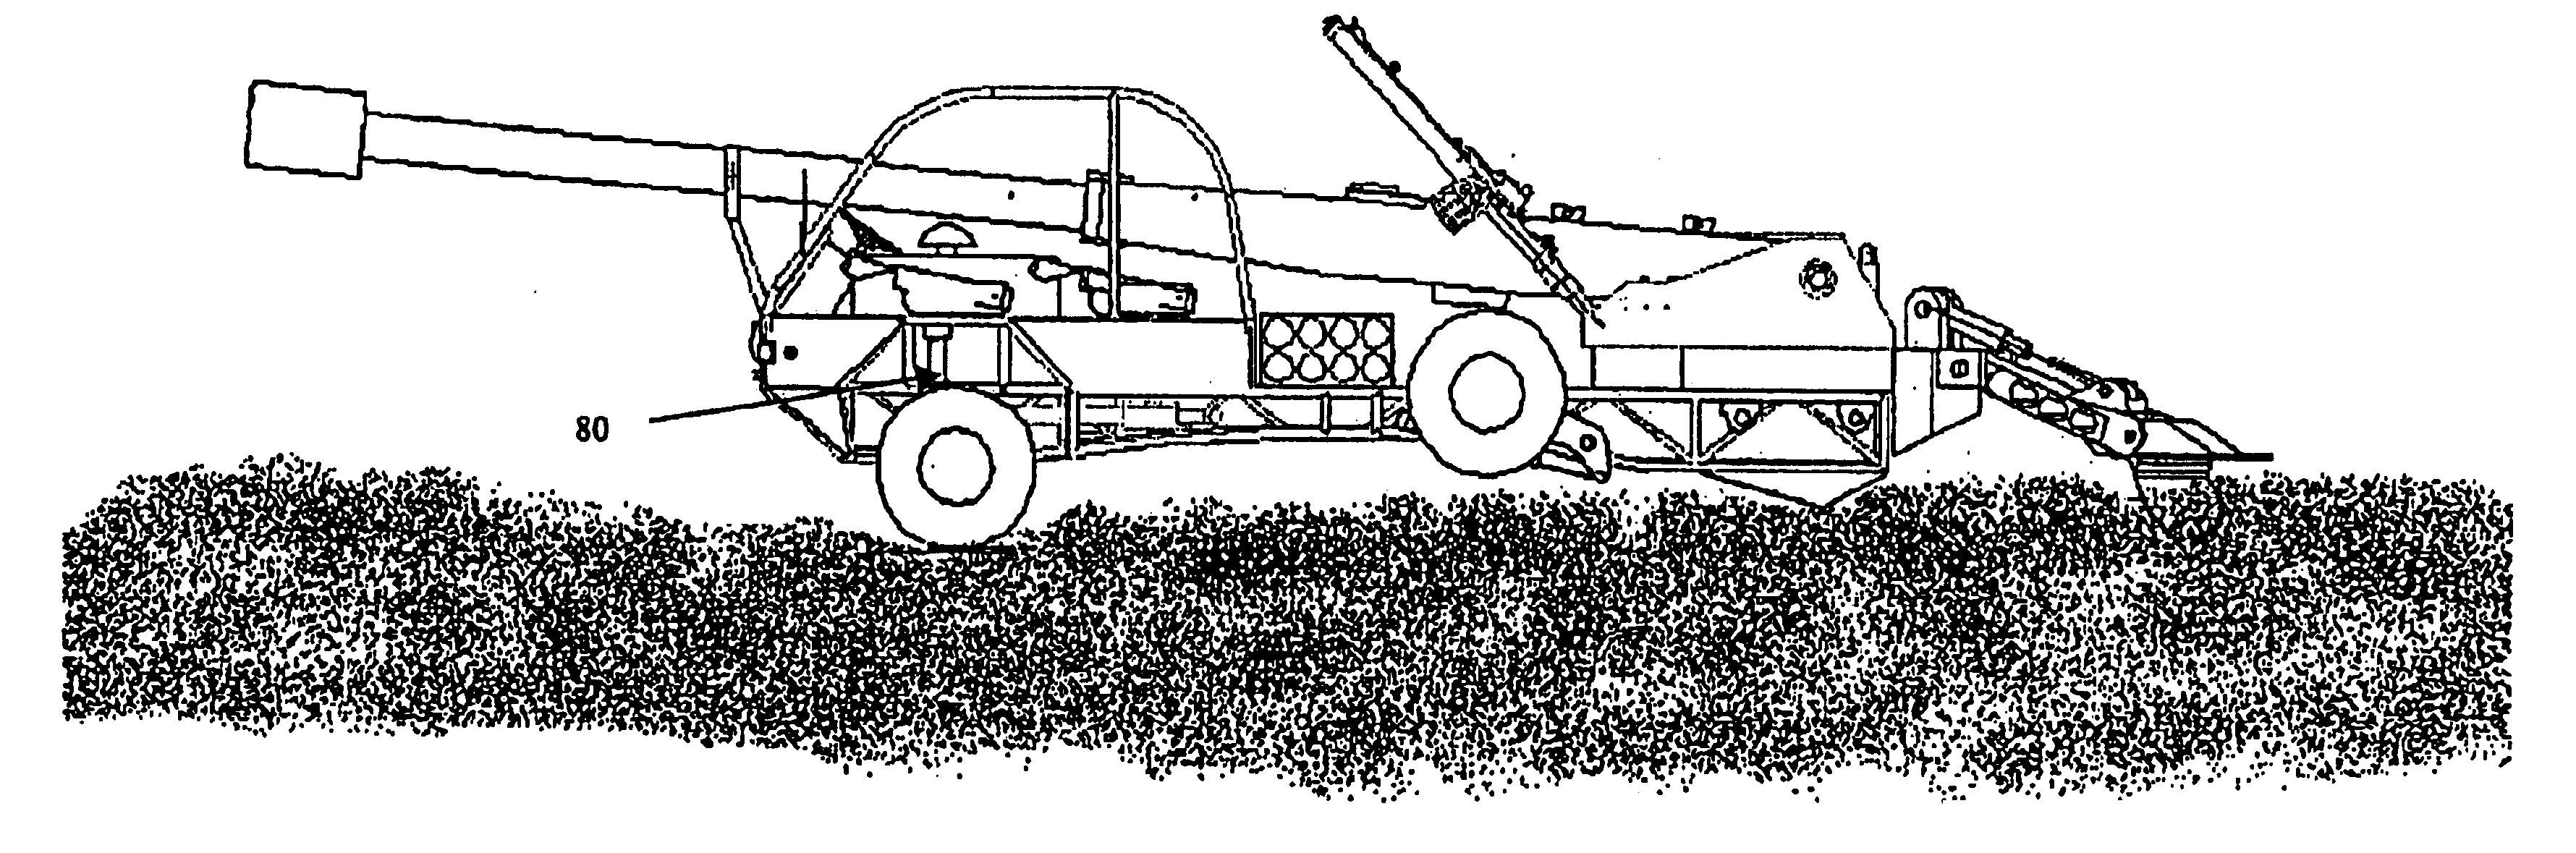 Mobile artillery system